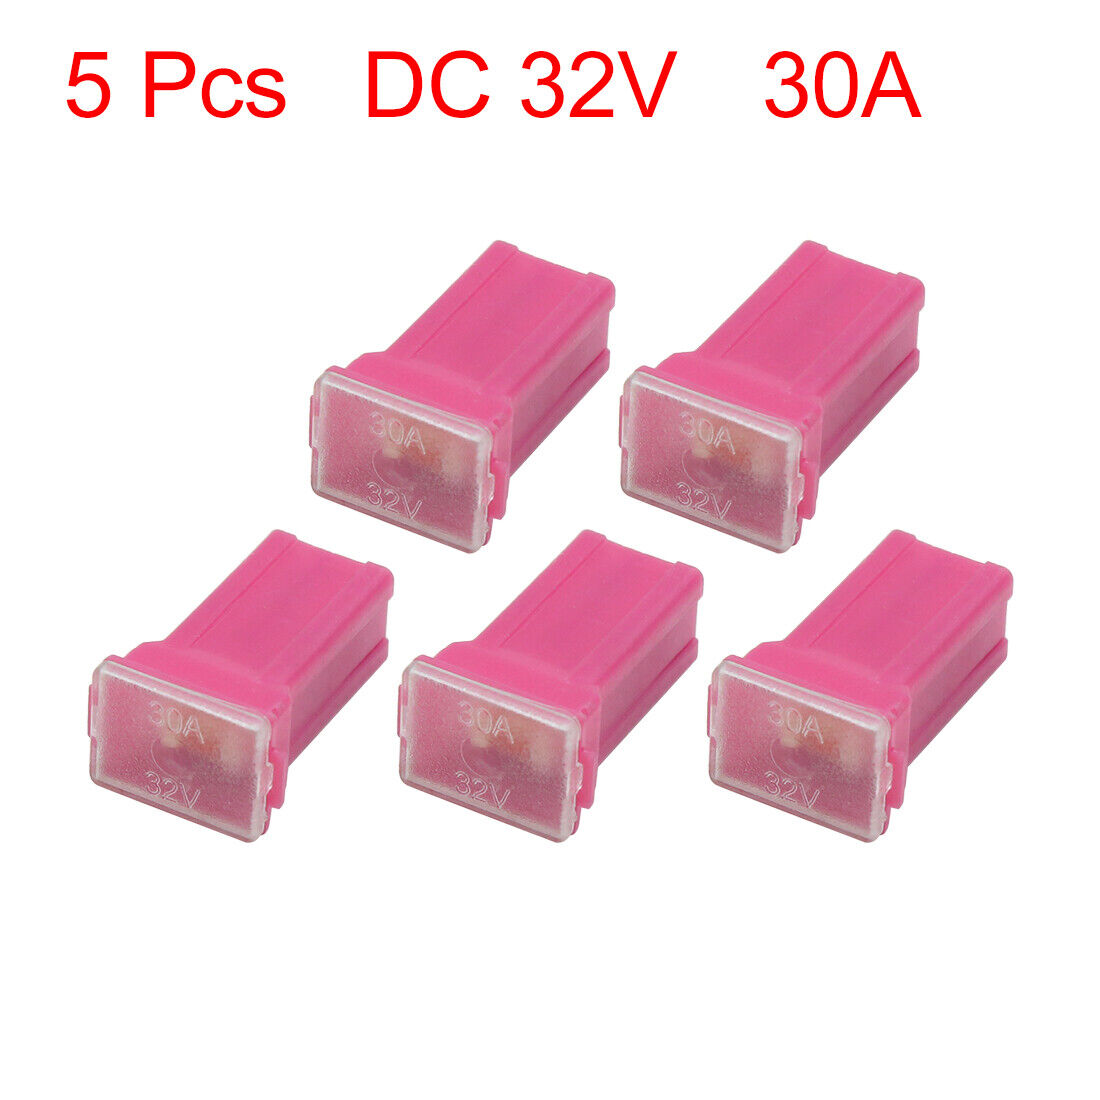 5pcs DC 32V 30A Pink Plastic Female Terminal PAL Cartridge Fuses for Car Auto